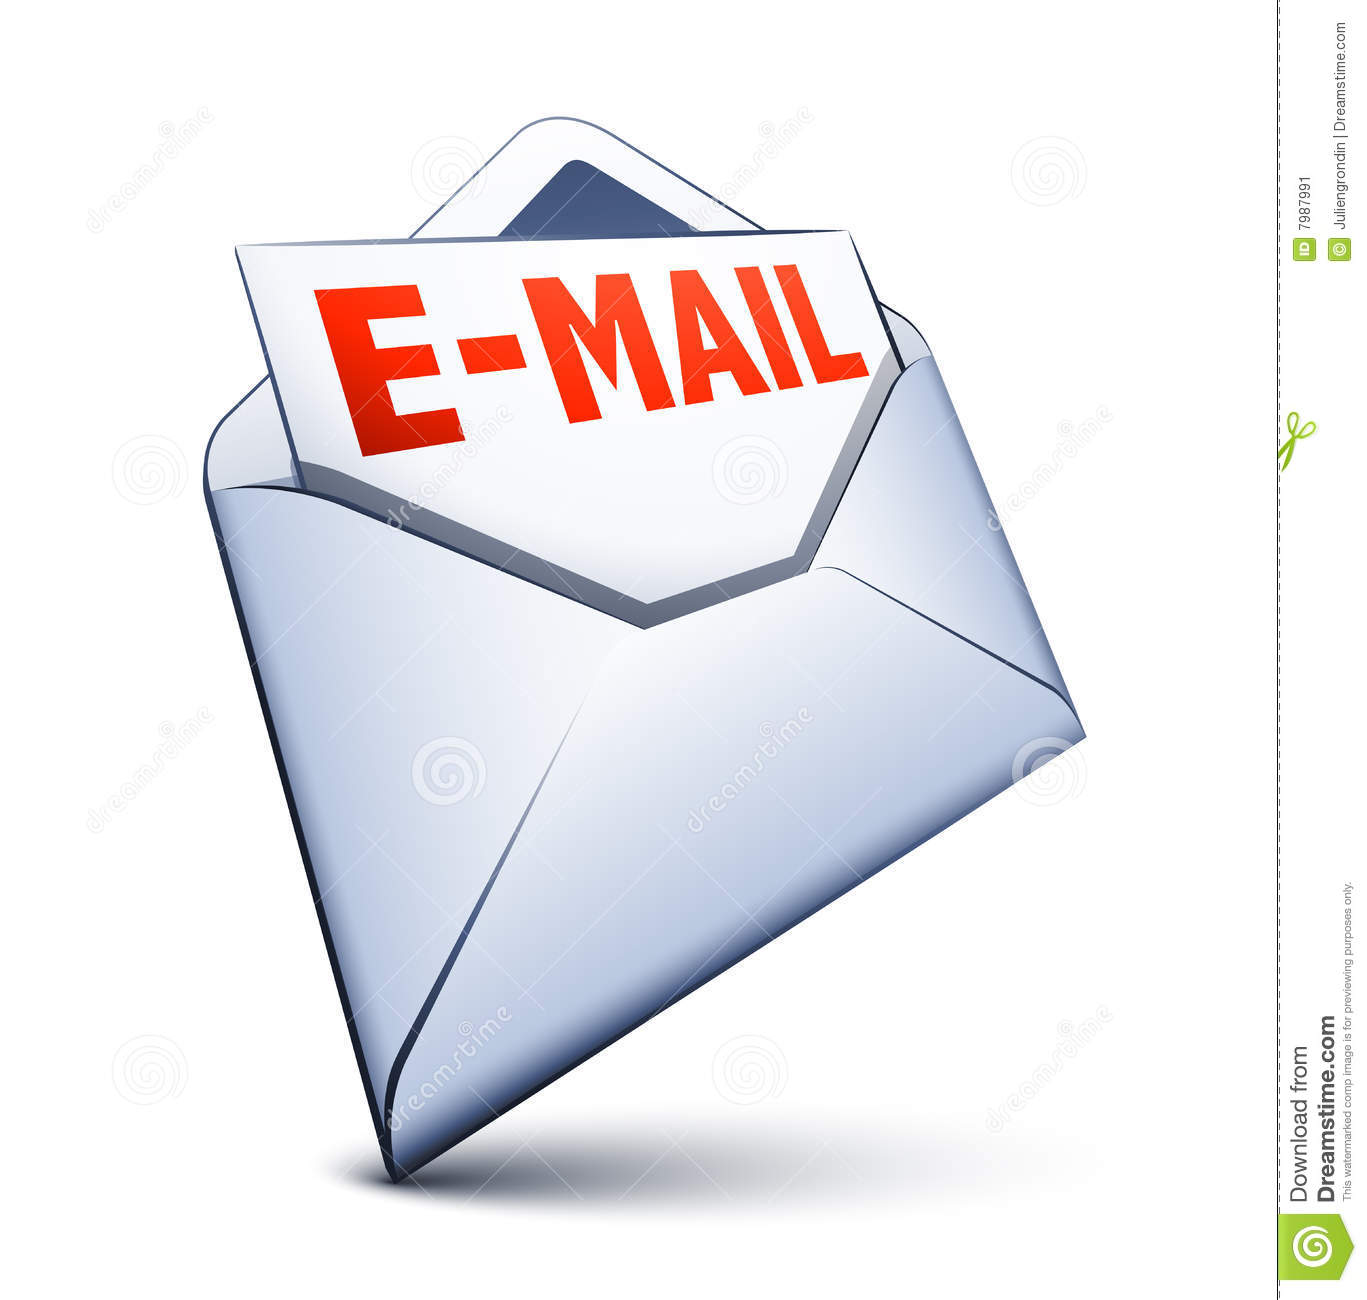 Email Icon Stock Image   Image  7987991